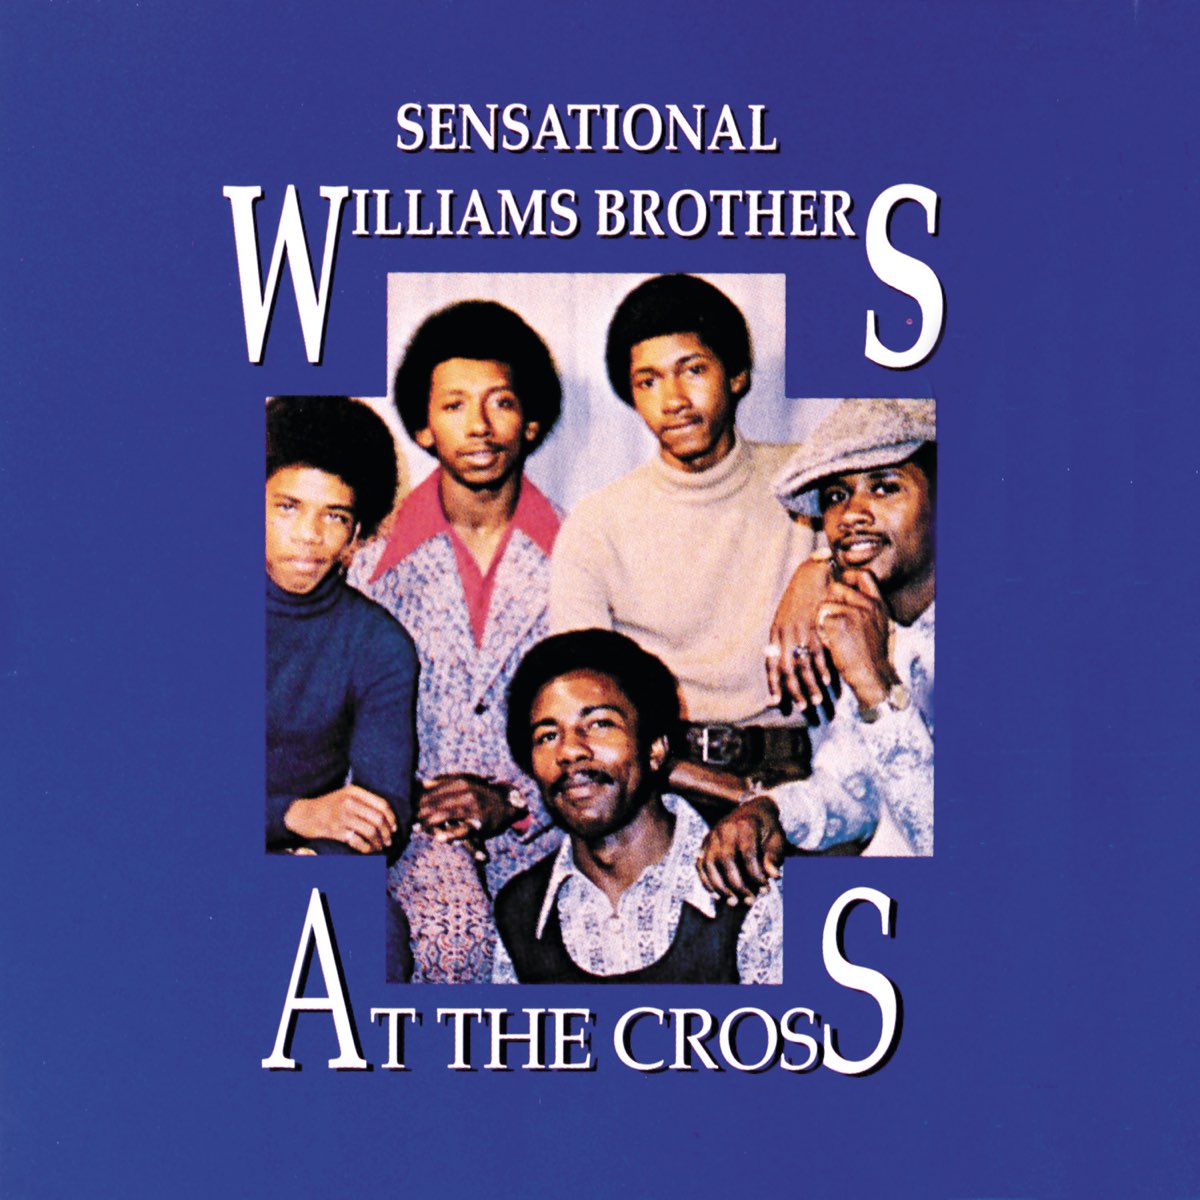 Williams brothers. Песни Crosses - Sensation. L39ion brothers Williams. Williams brothers - this is your Night (1991).